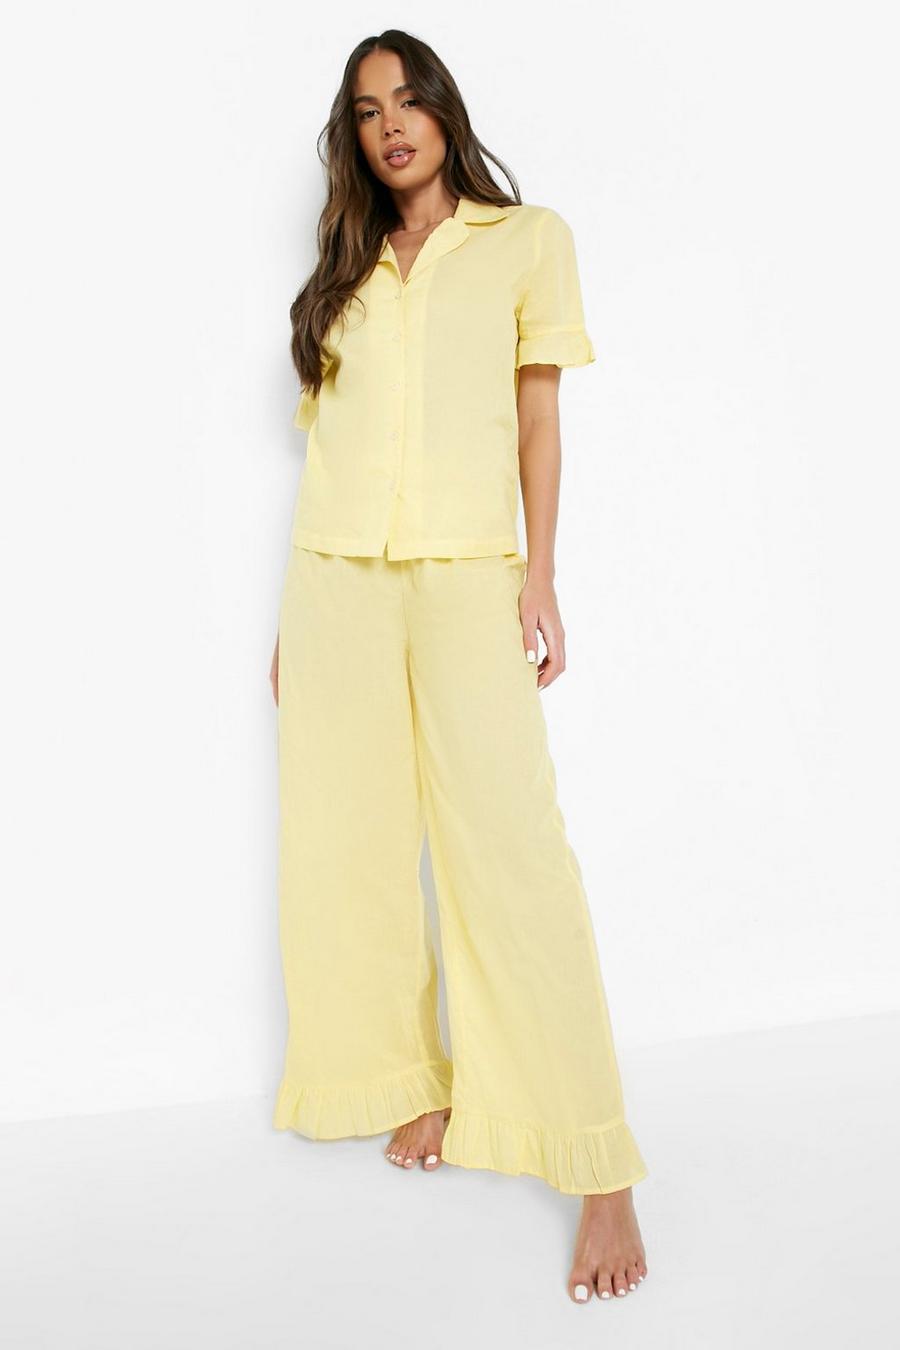 Lemon yellow Hotel Luxe Cotton Mix & Match Frill Trouser